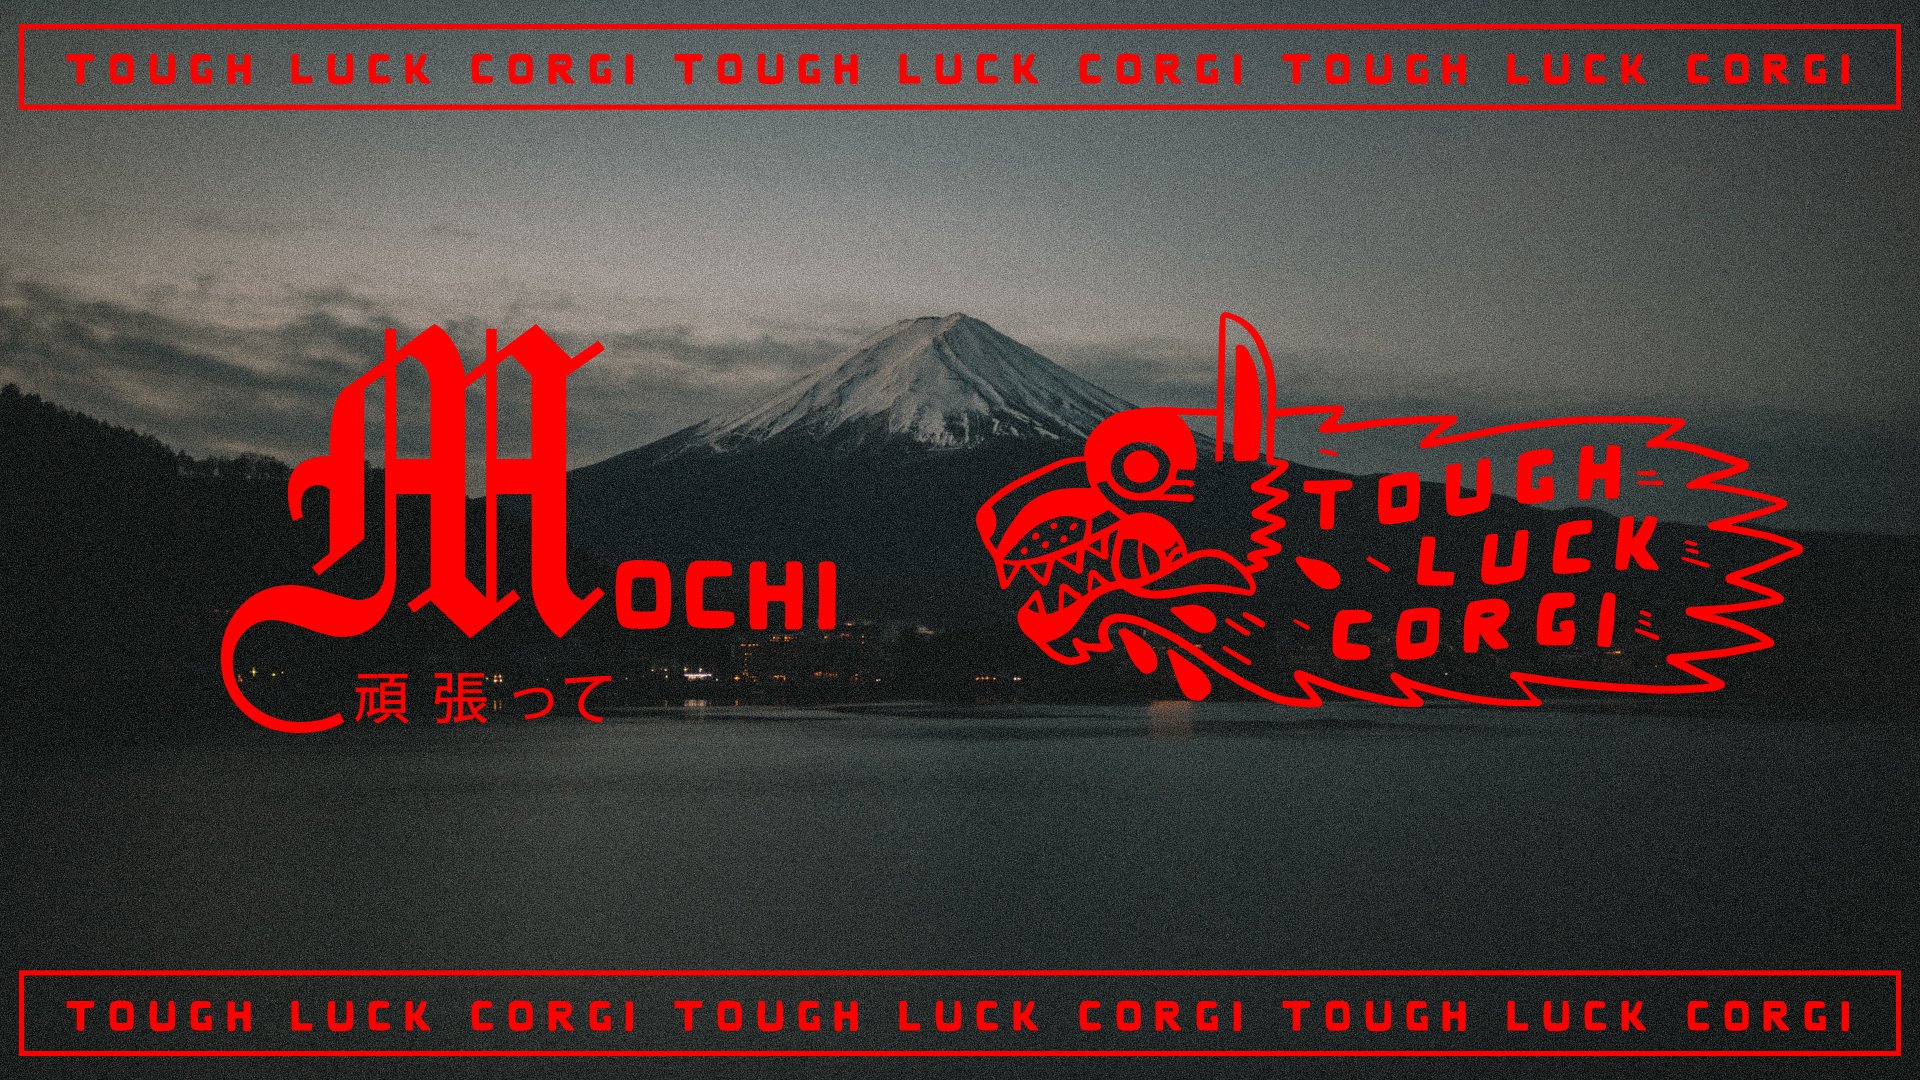 Mochi CompsArtboard 1 copy 2.jpg